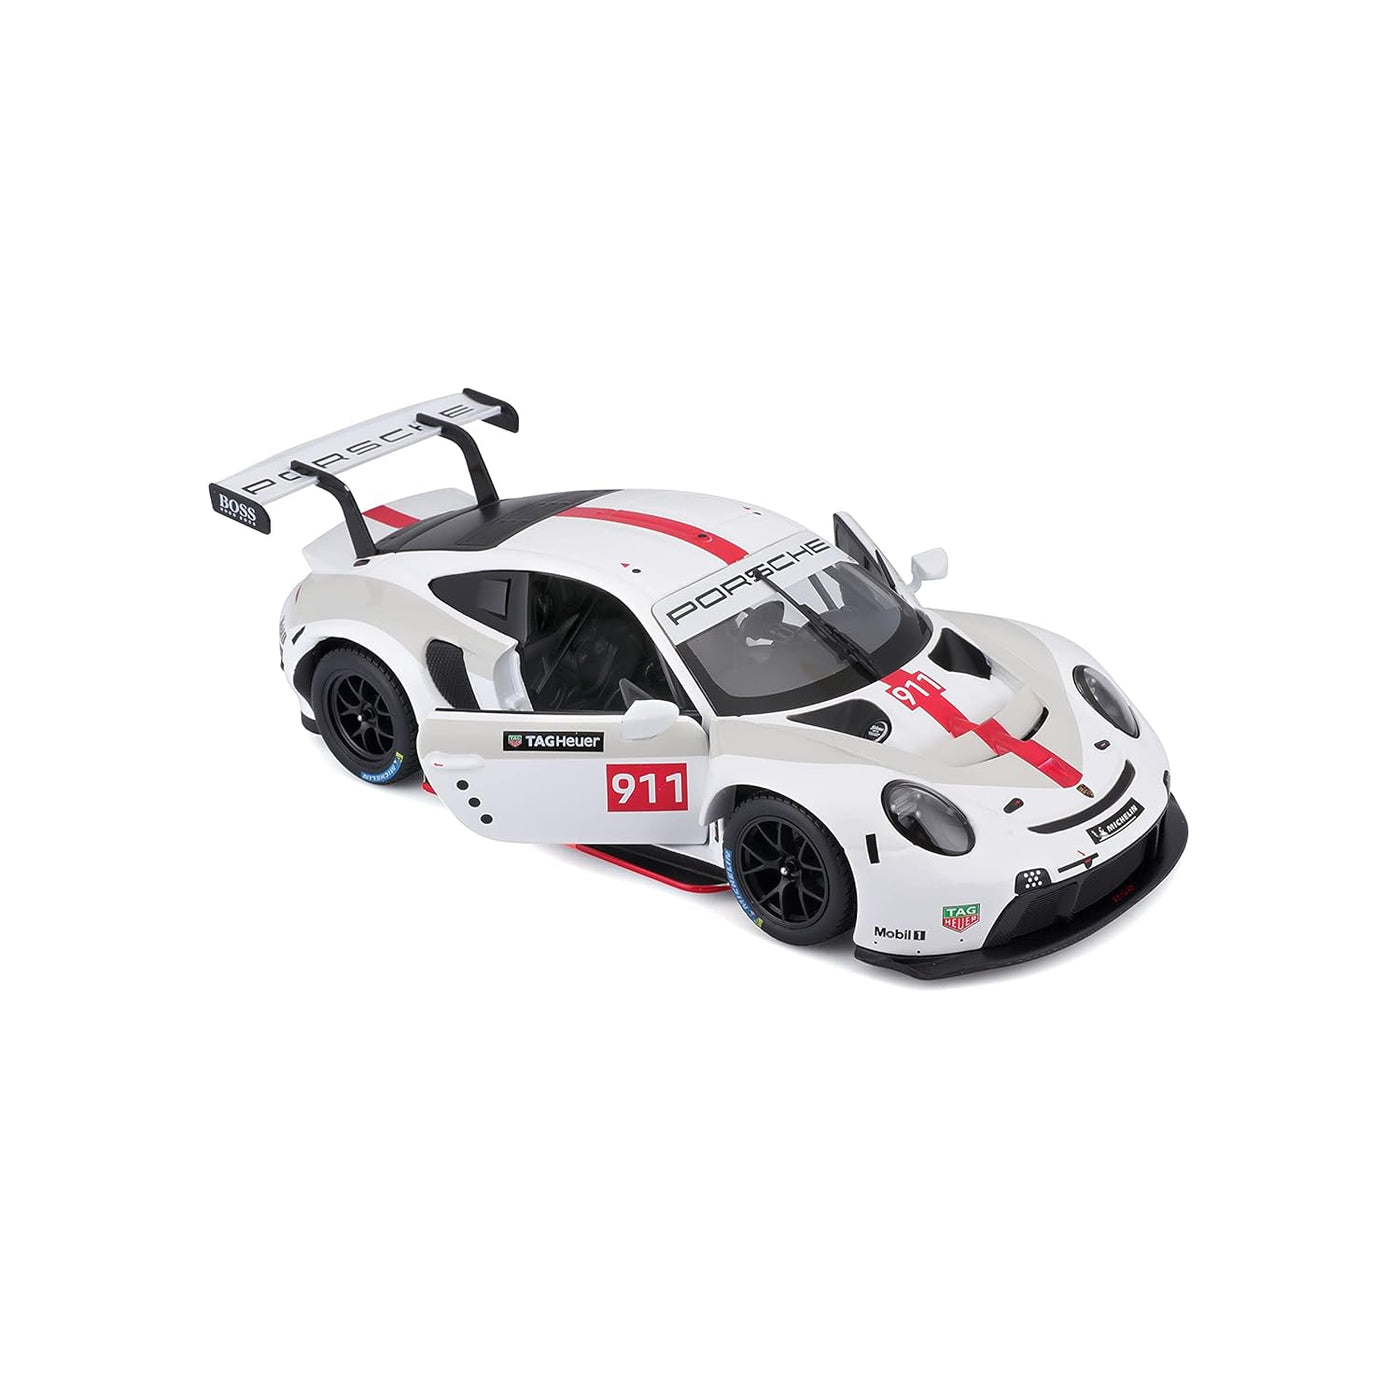 Bburago Porsche 911 RSR White - 1:24 Die-Cast Scale Model